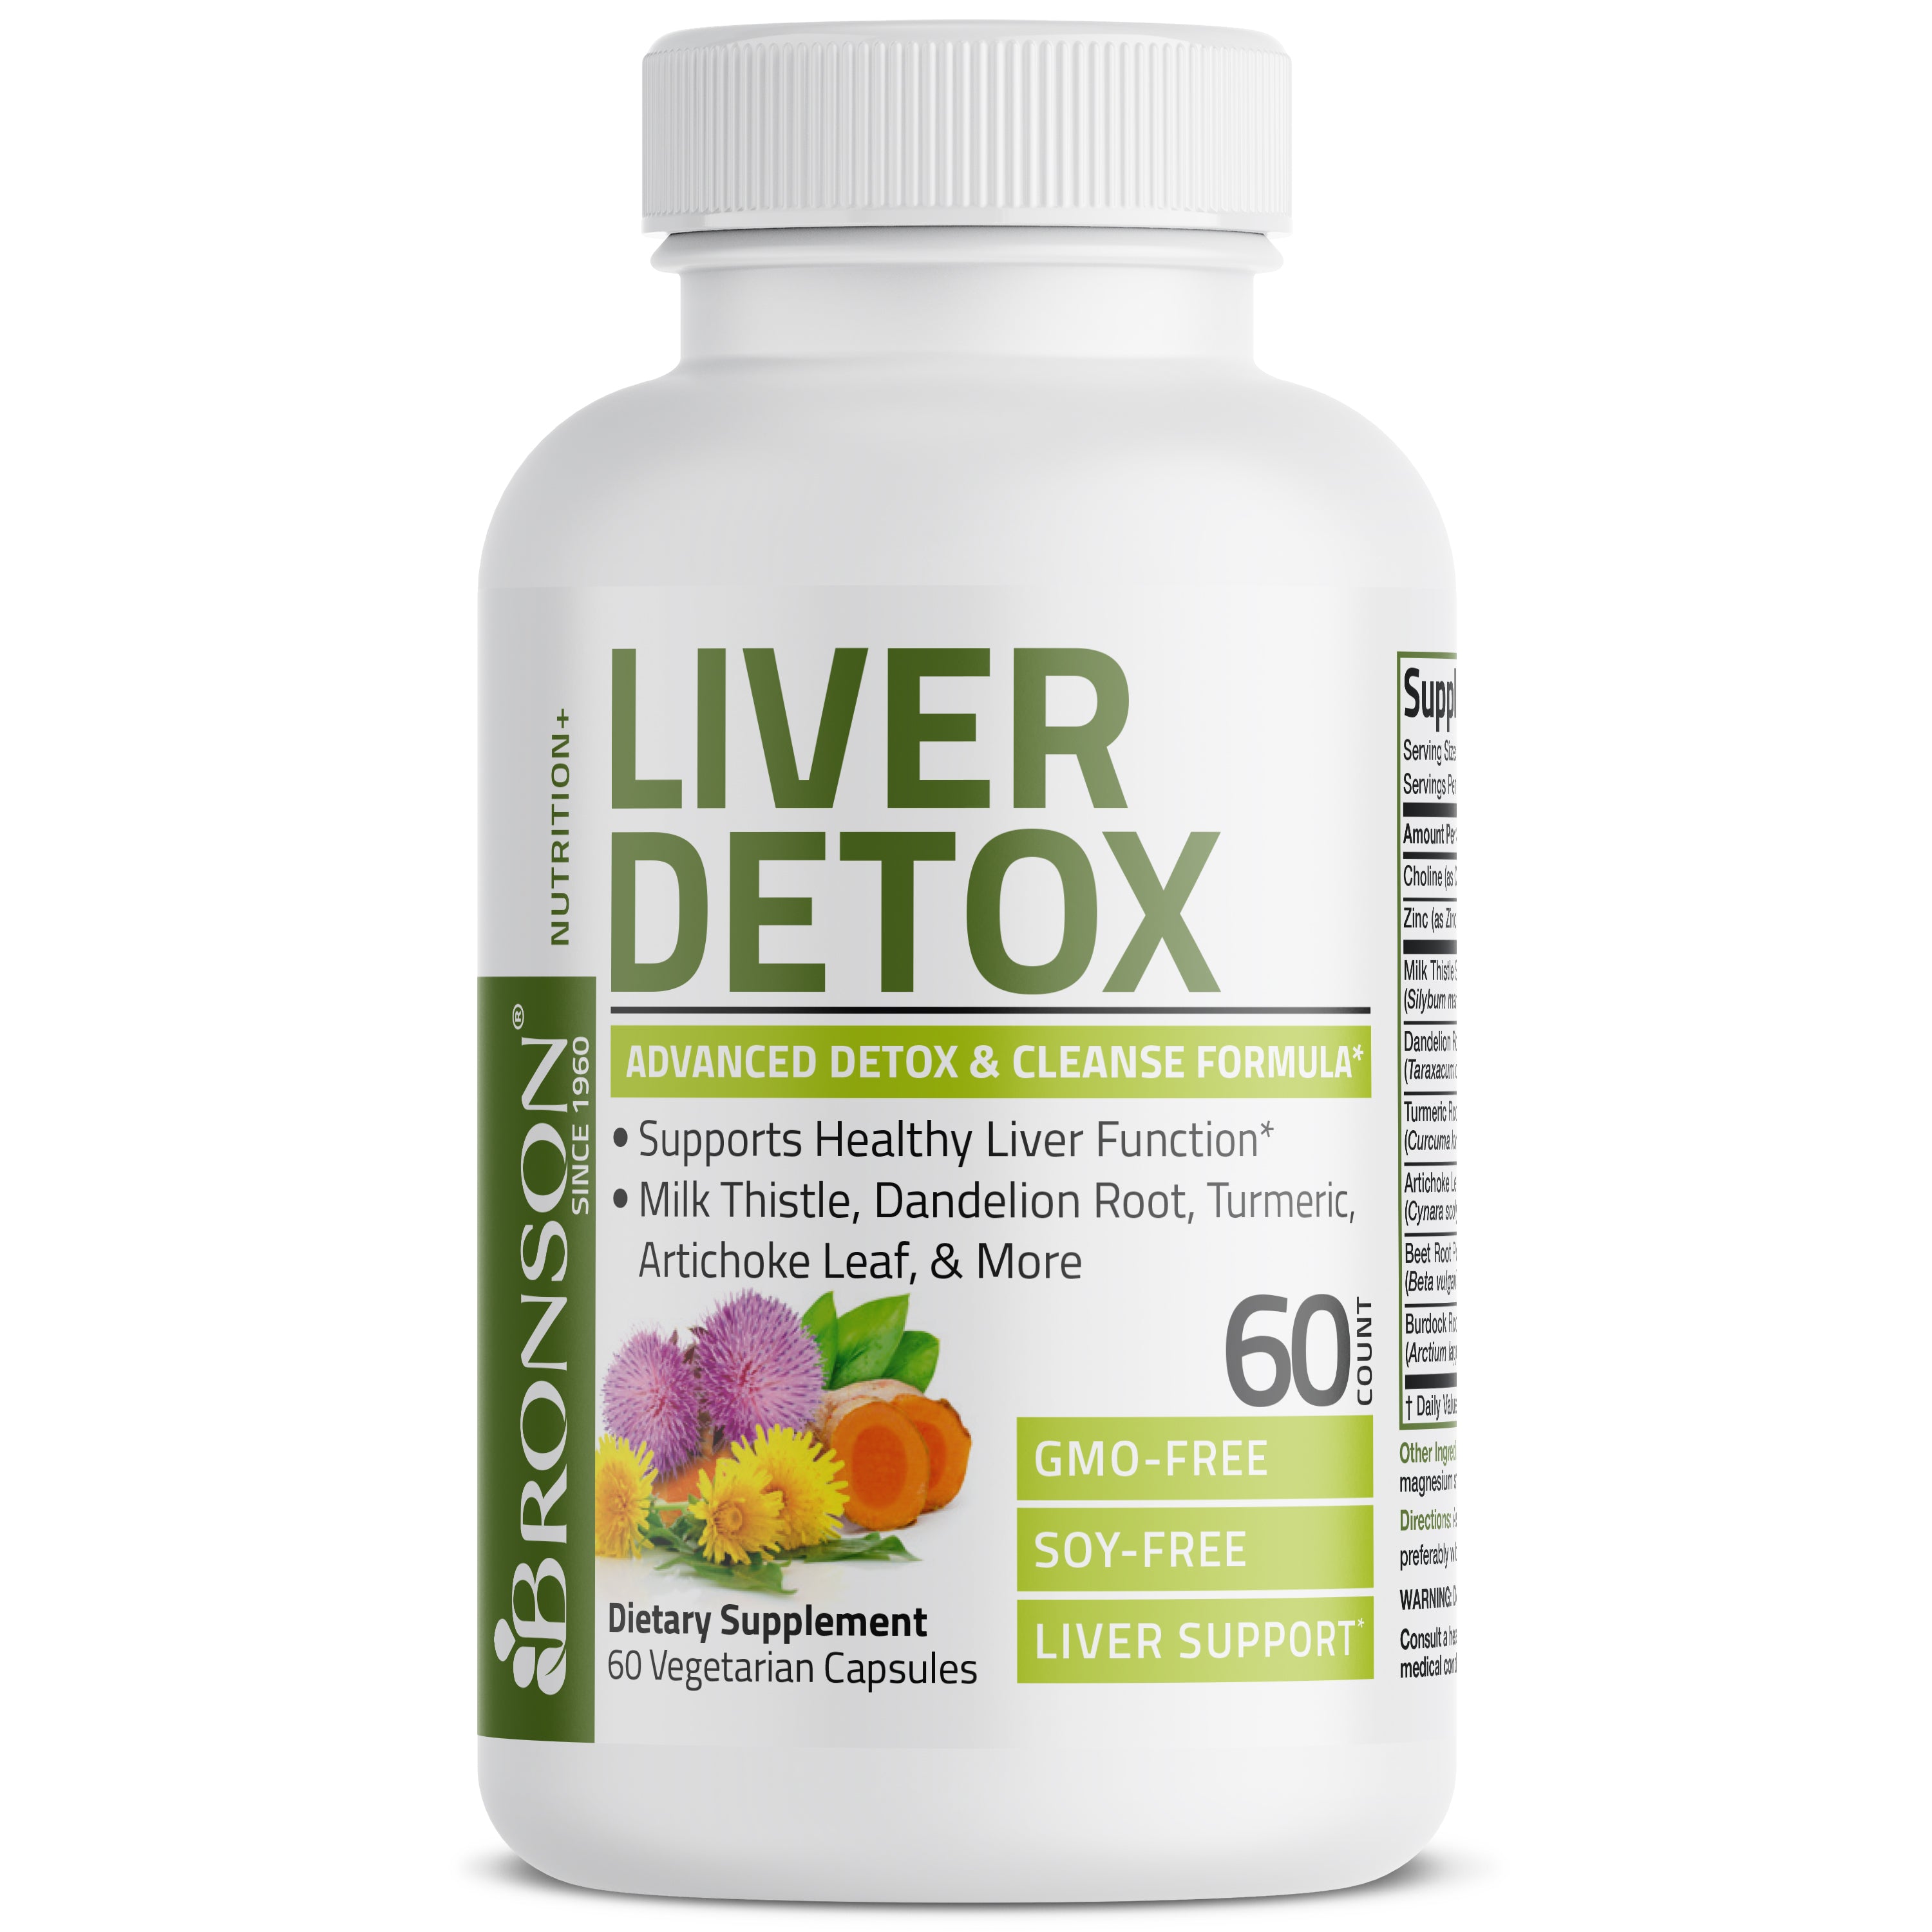 Liver Detox Advanced Detox & Cleansing Formula view 3 of 6